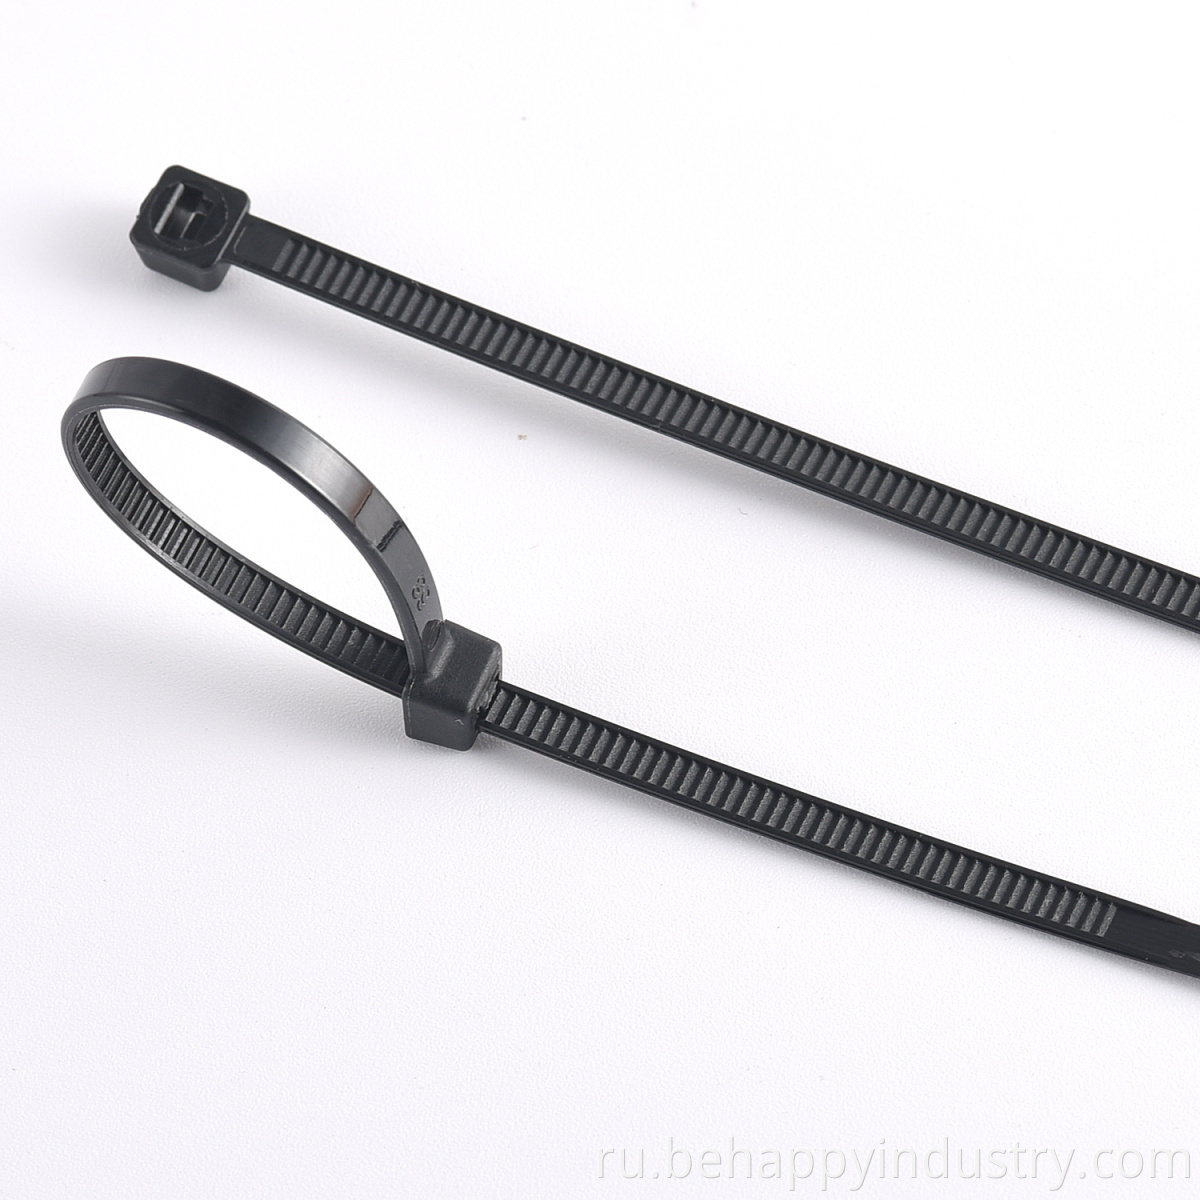  Plastic Nylon Cable Tie